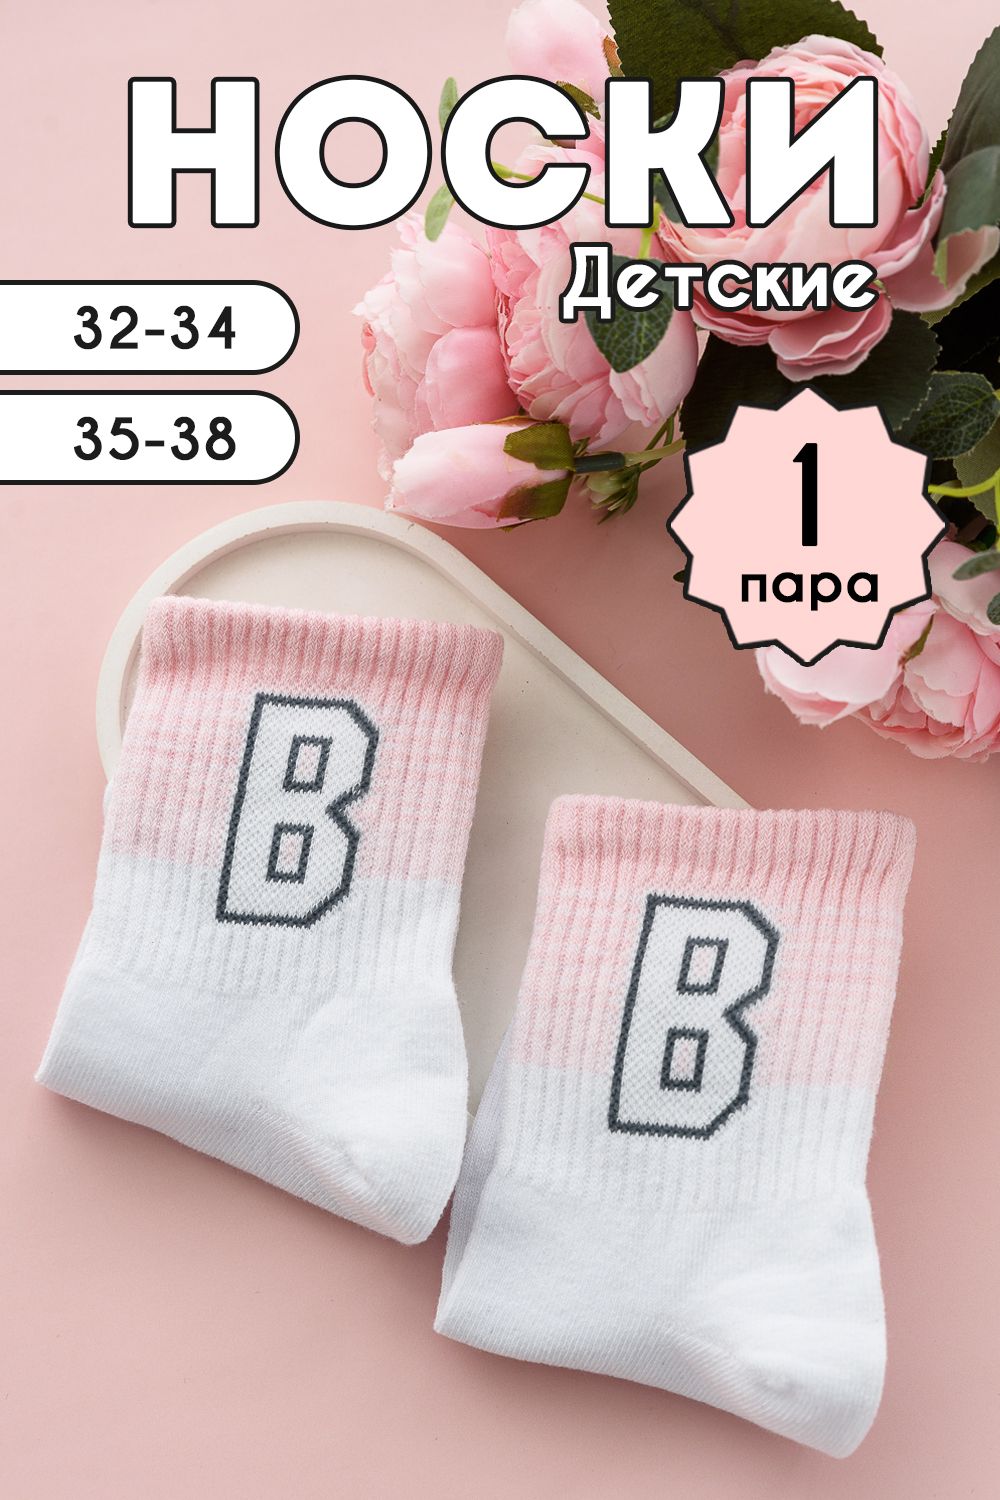 Носки детские Буква В комплект 1 пара - розовый